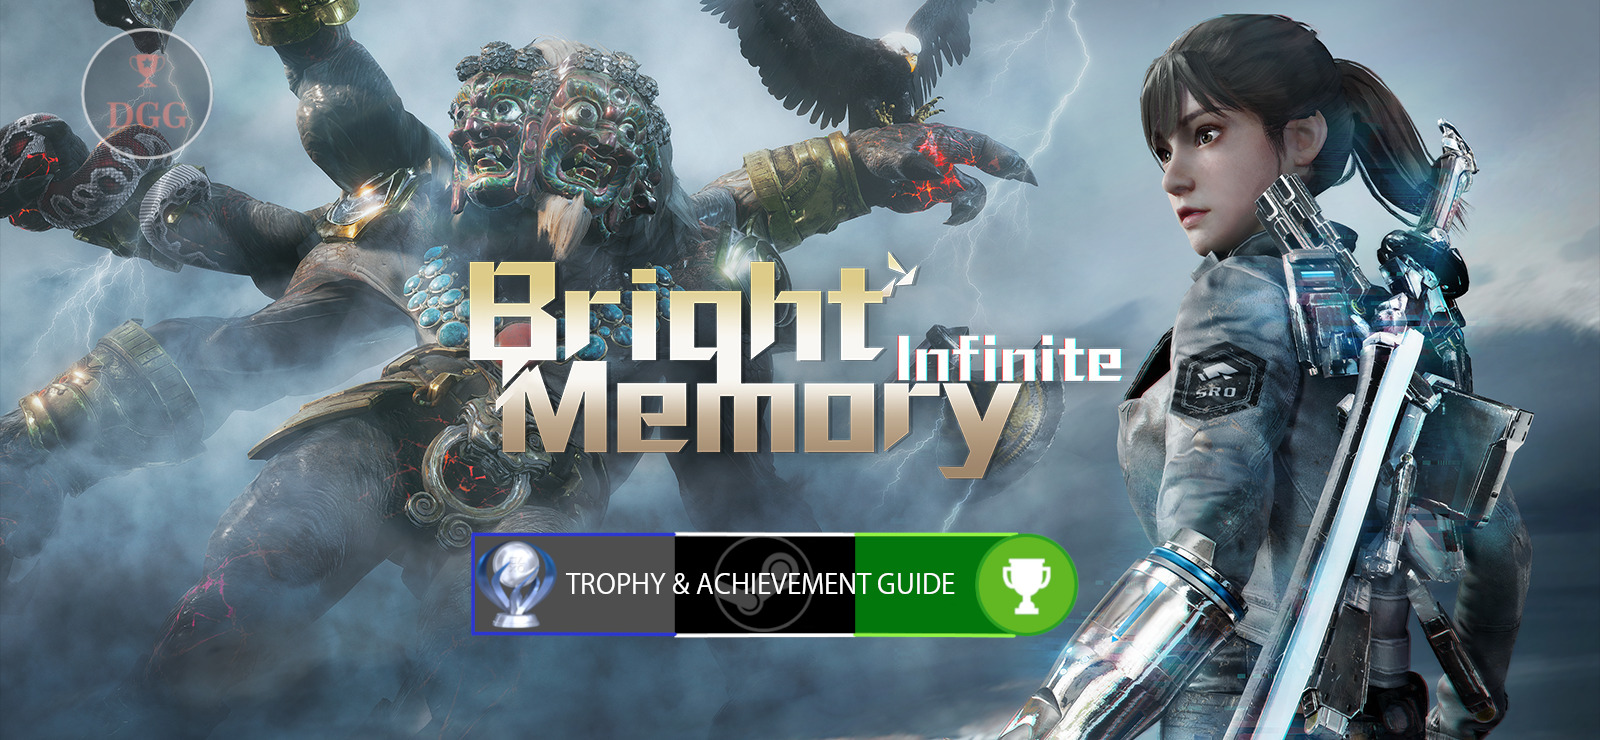 Bright Memory Infinite Trophy Achievement Guide